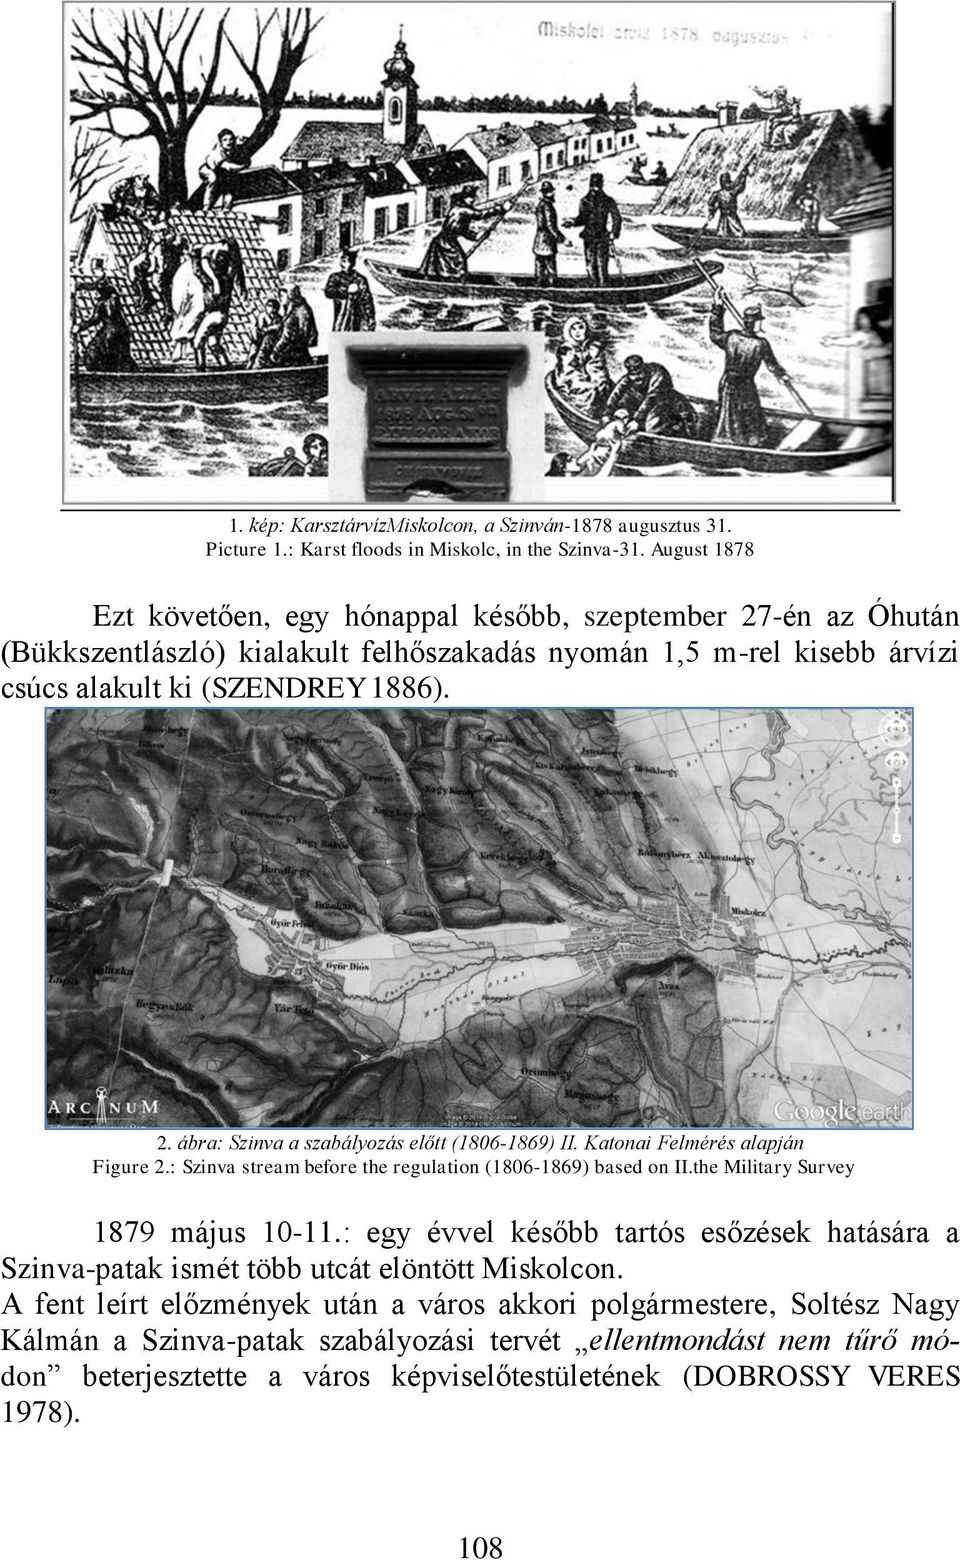 Katonai Felmérés alapján Figure 2.: Szinva stream before the regulation (1806-1869) based on II.the Military Survey 1879 május 10-11.